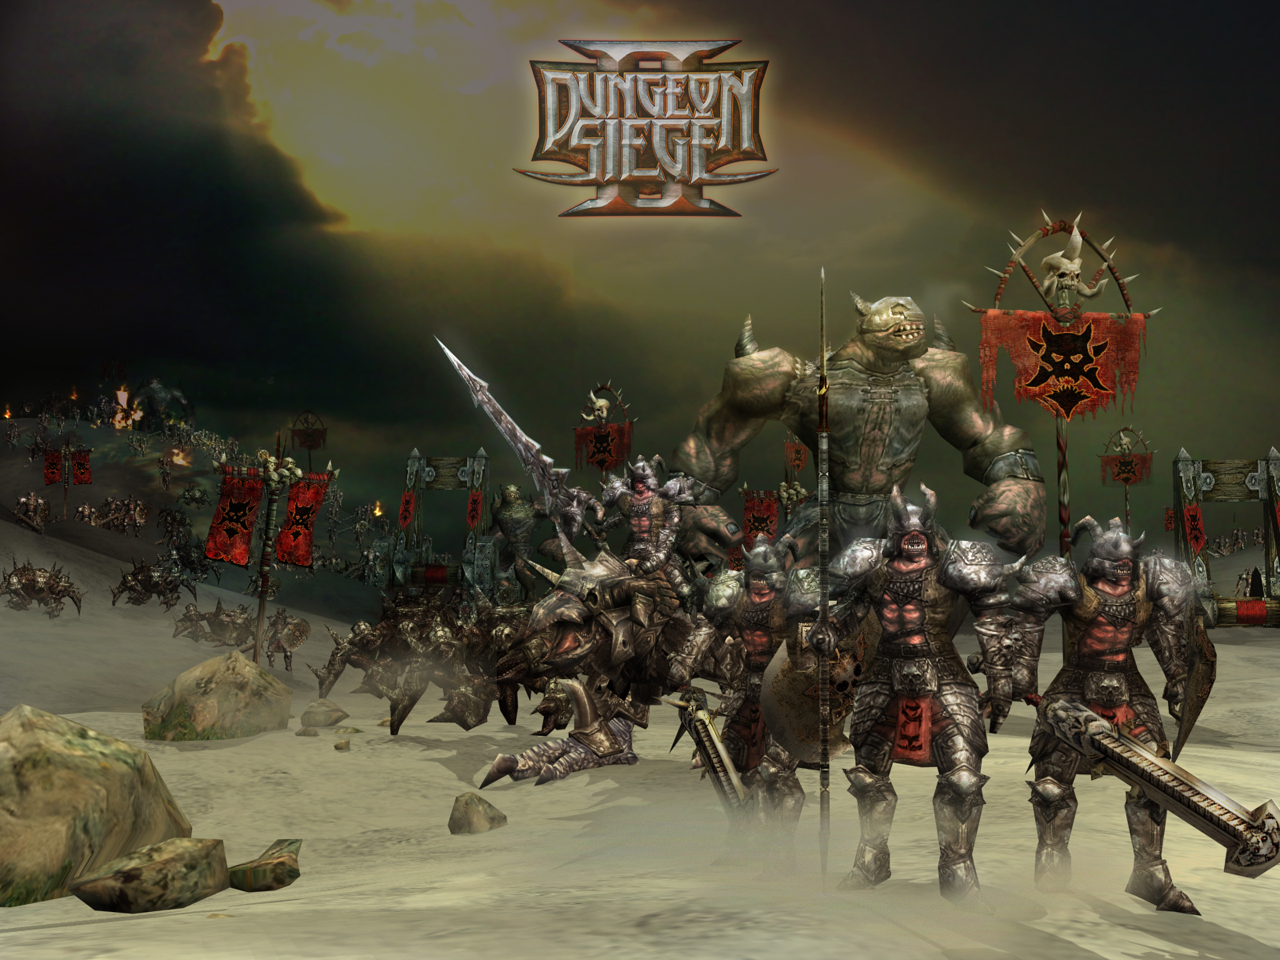 Dungeon Siege II (2005) promotional art